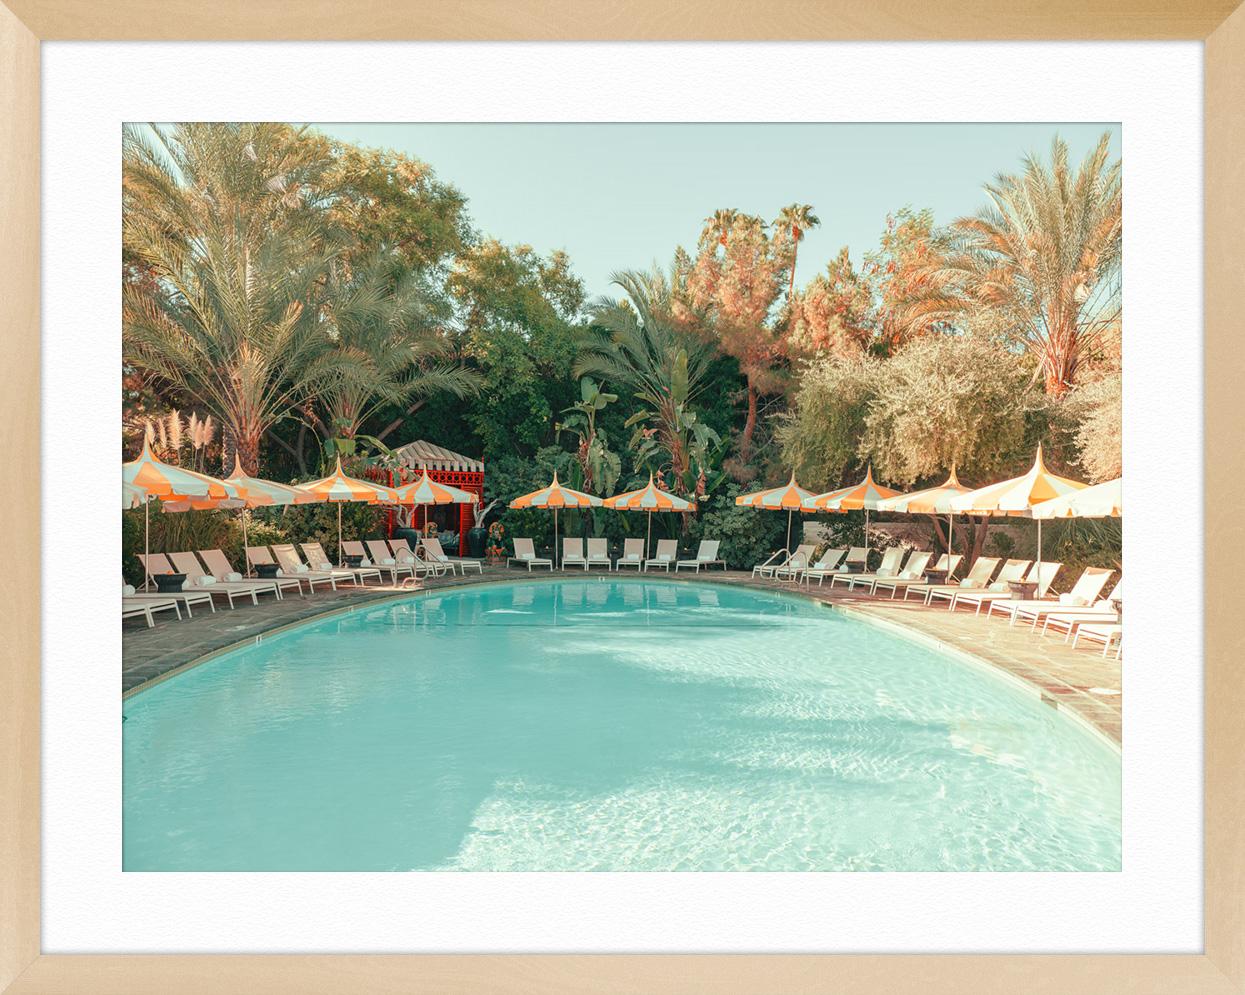 Le piscine de Palm Springs en vente 1